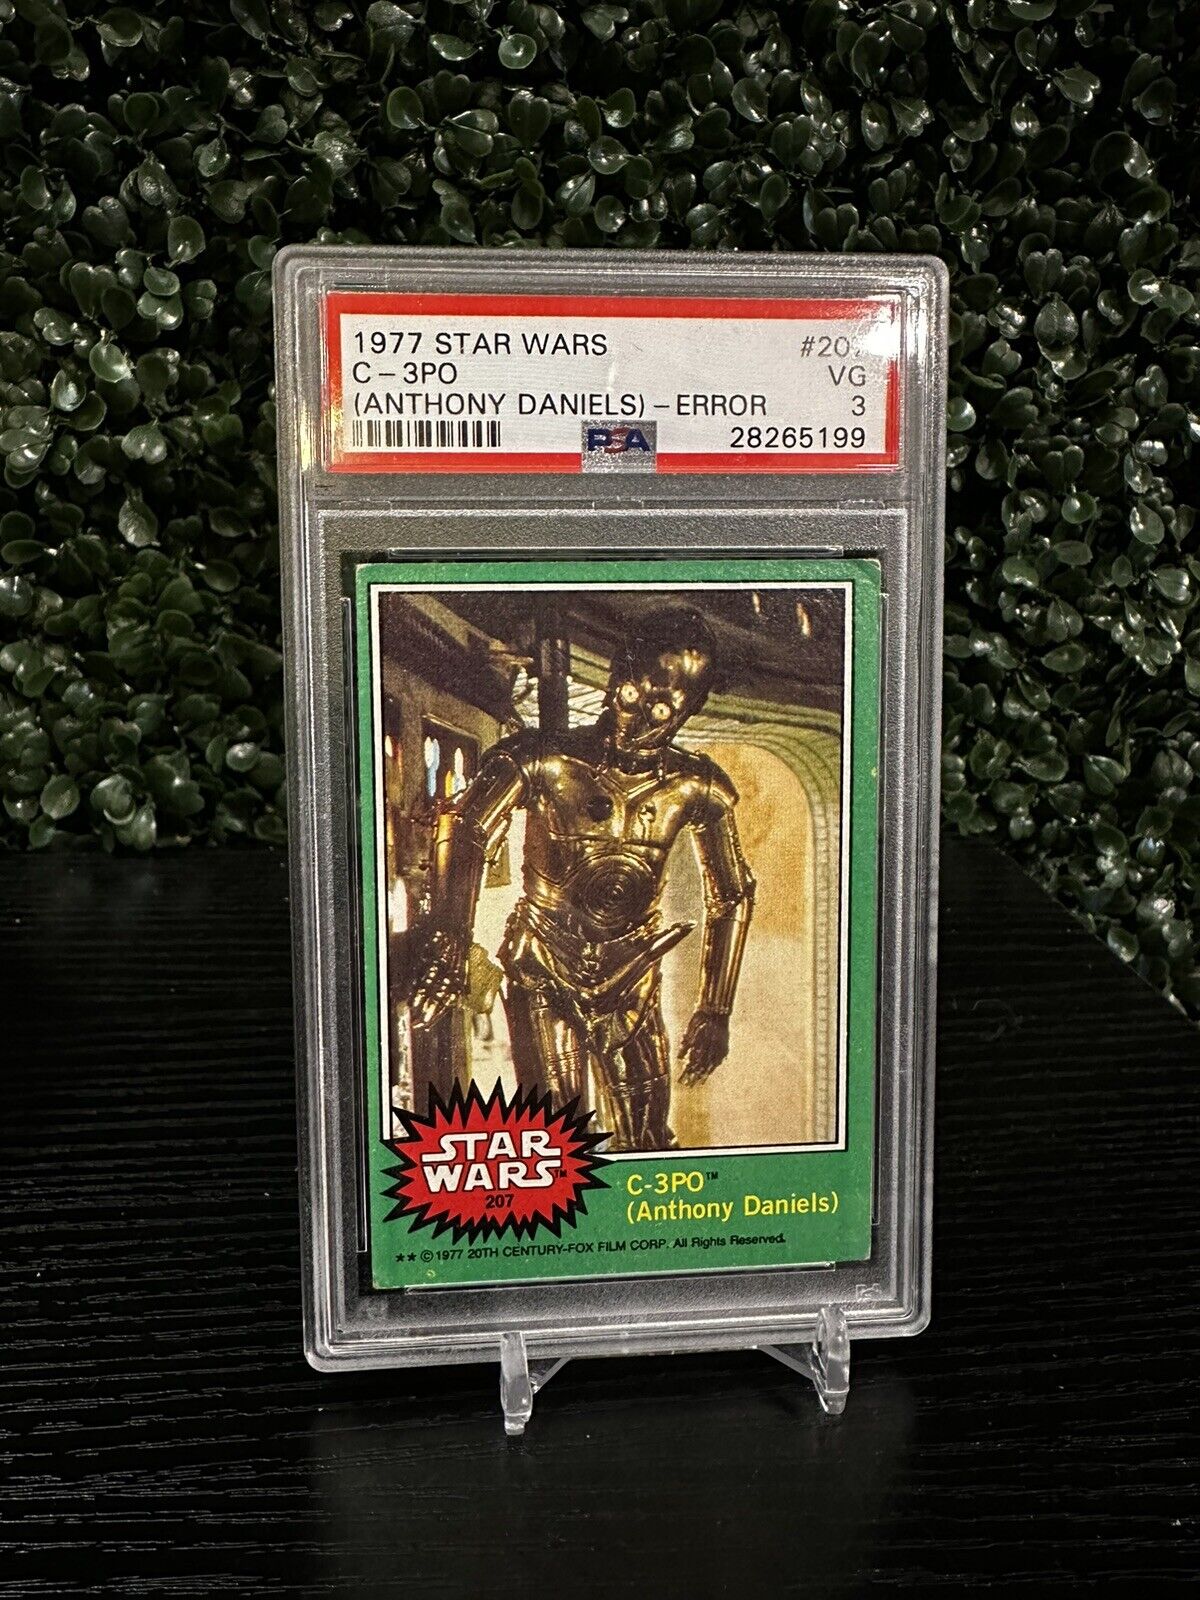 Star Wars C-3PO Golden Rod PSA 3 VG Topps 1977 Error Card #207 Vintage Graded